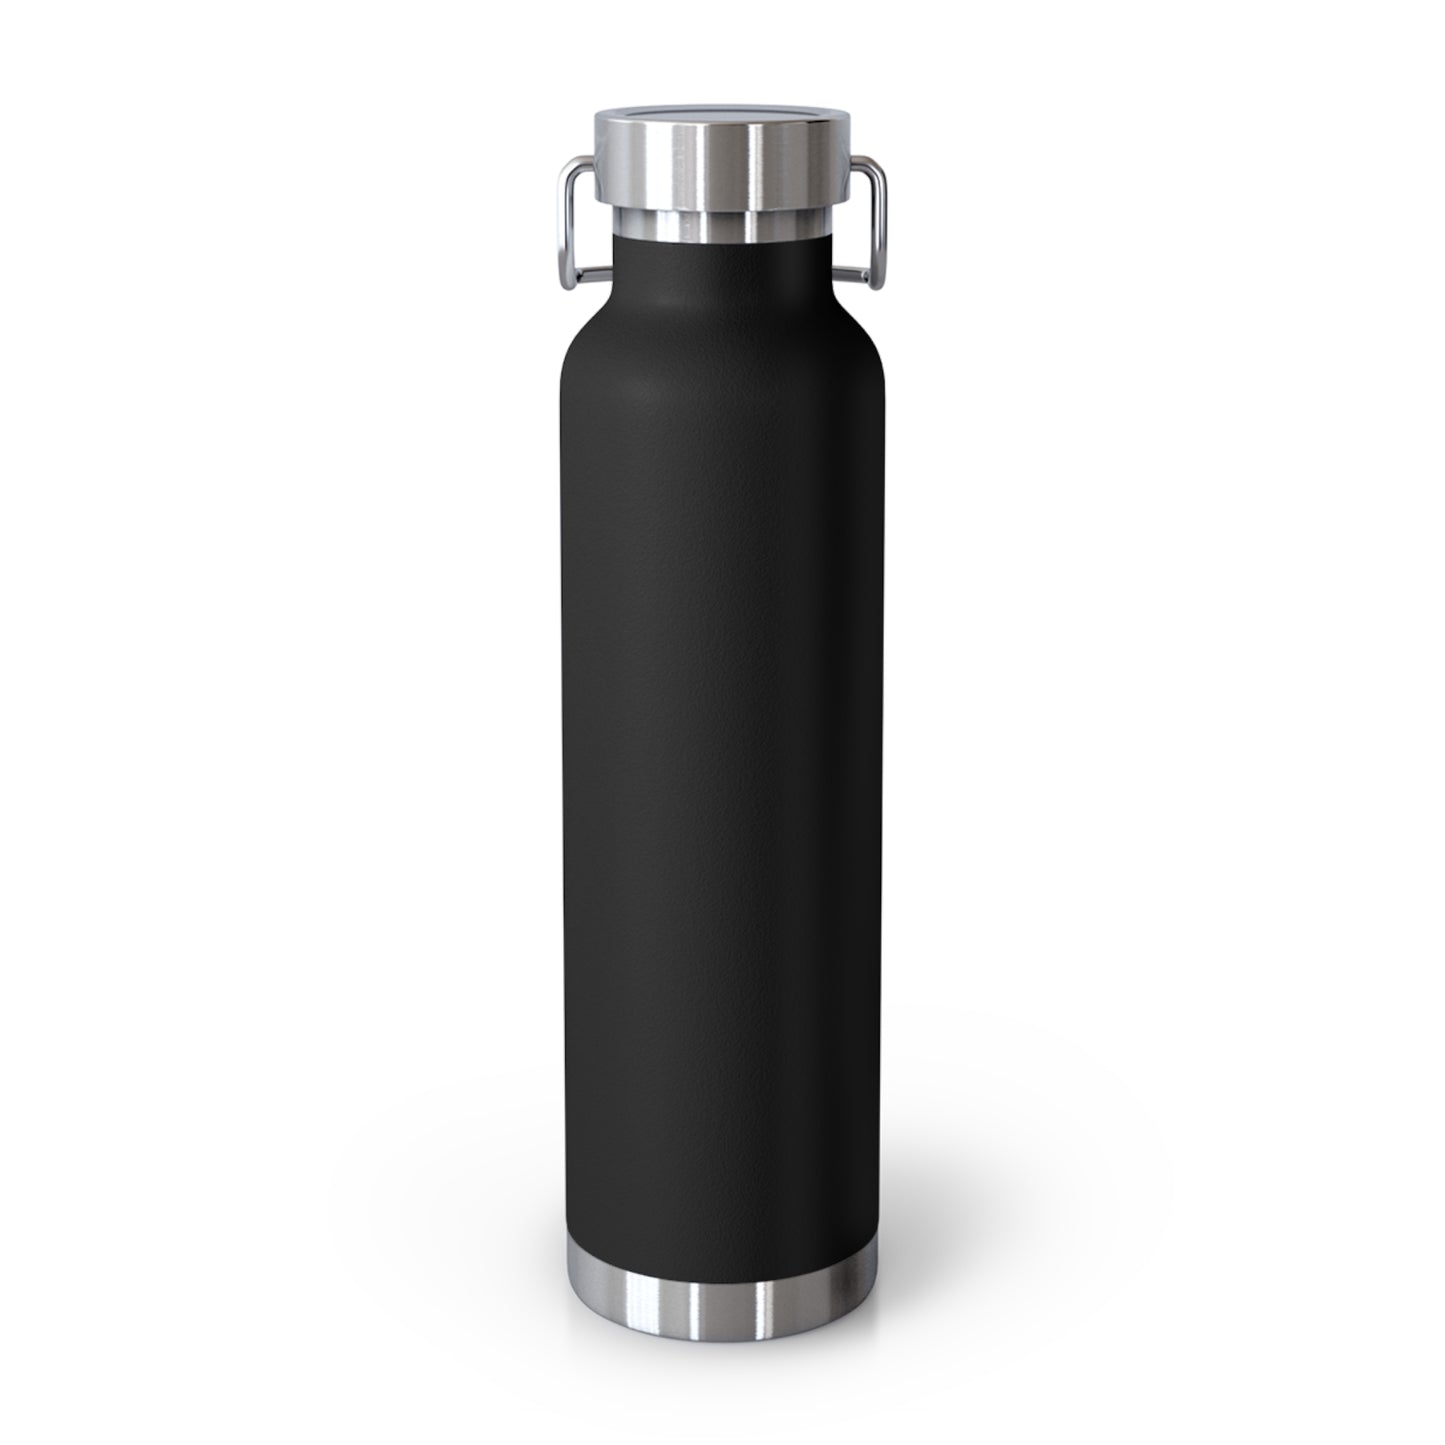 "Make Music Great Again" 22oz Vacuum Insulated Bottle (Black)